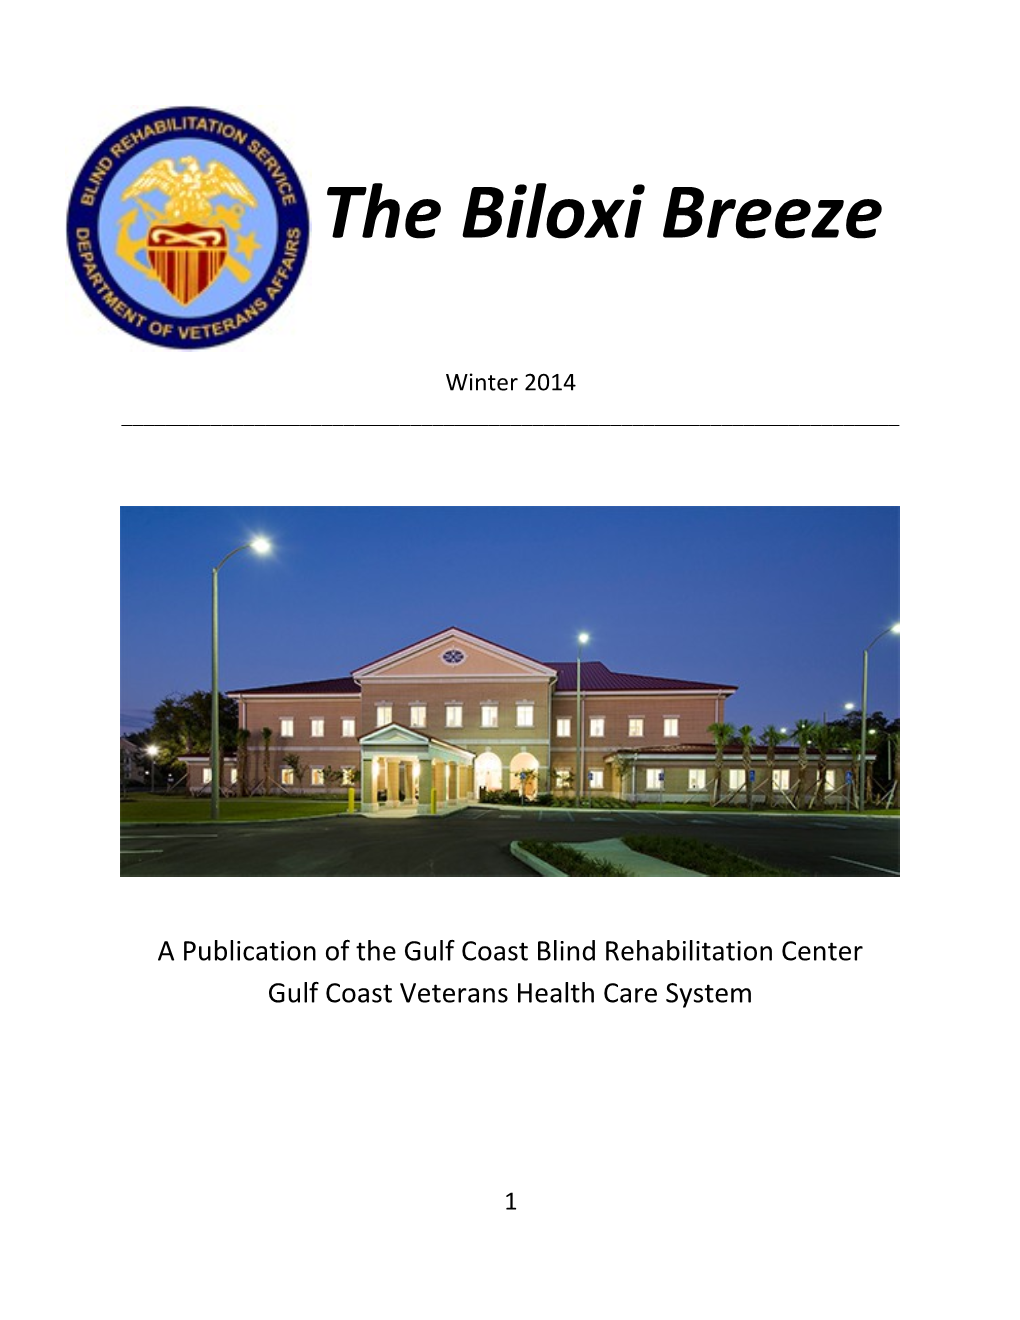 A Publication of the Gulf Coast Blind Rehabilitation Center